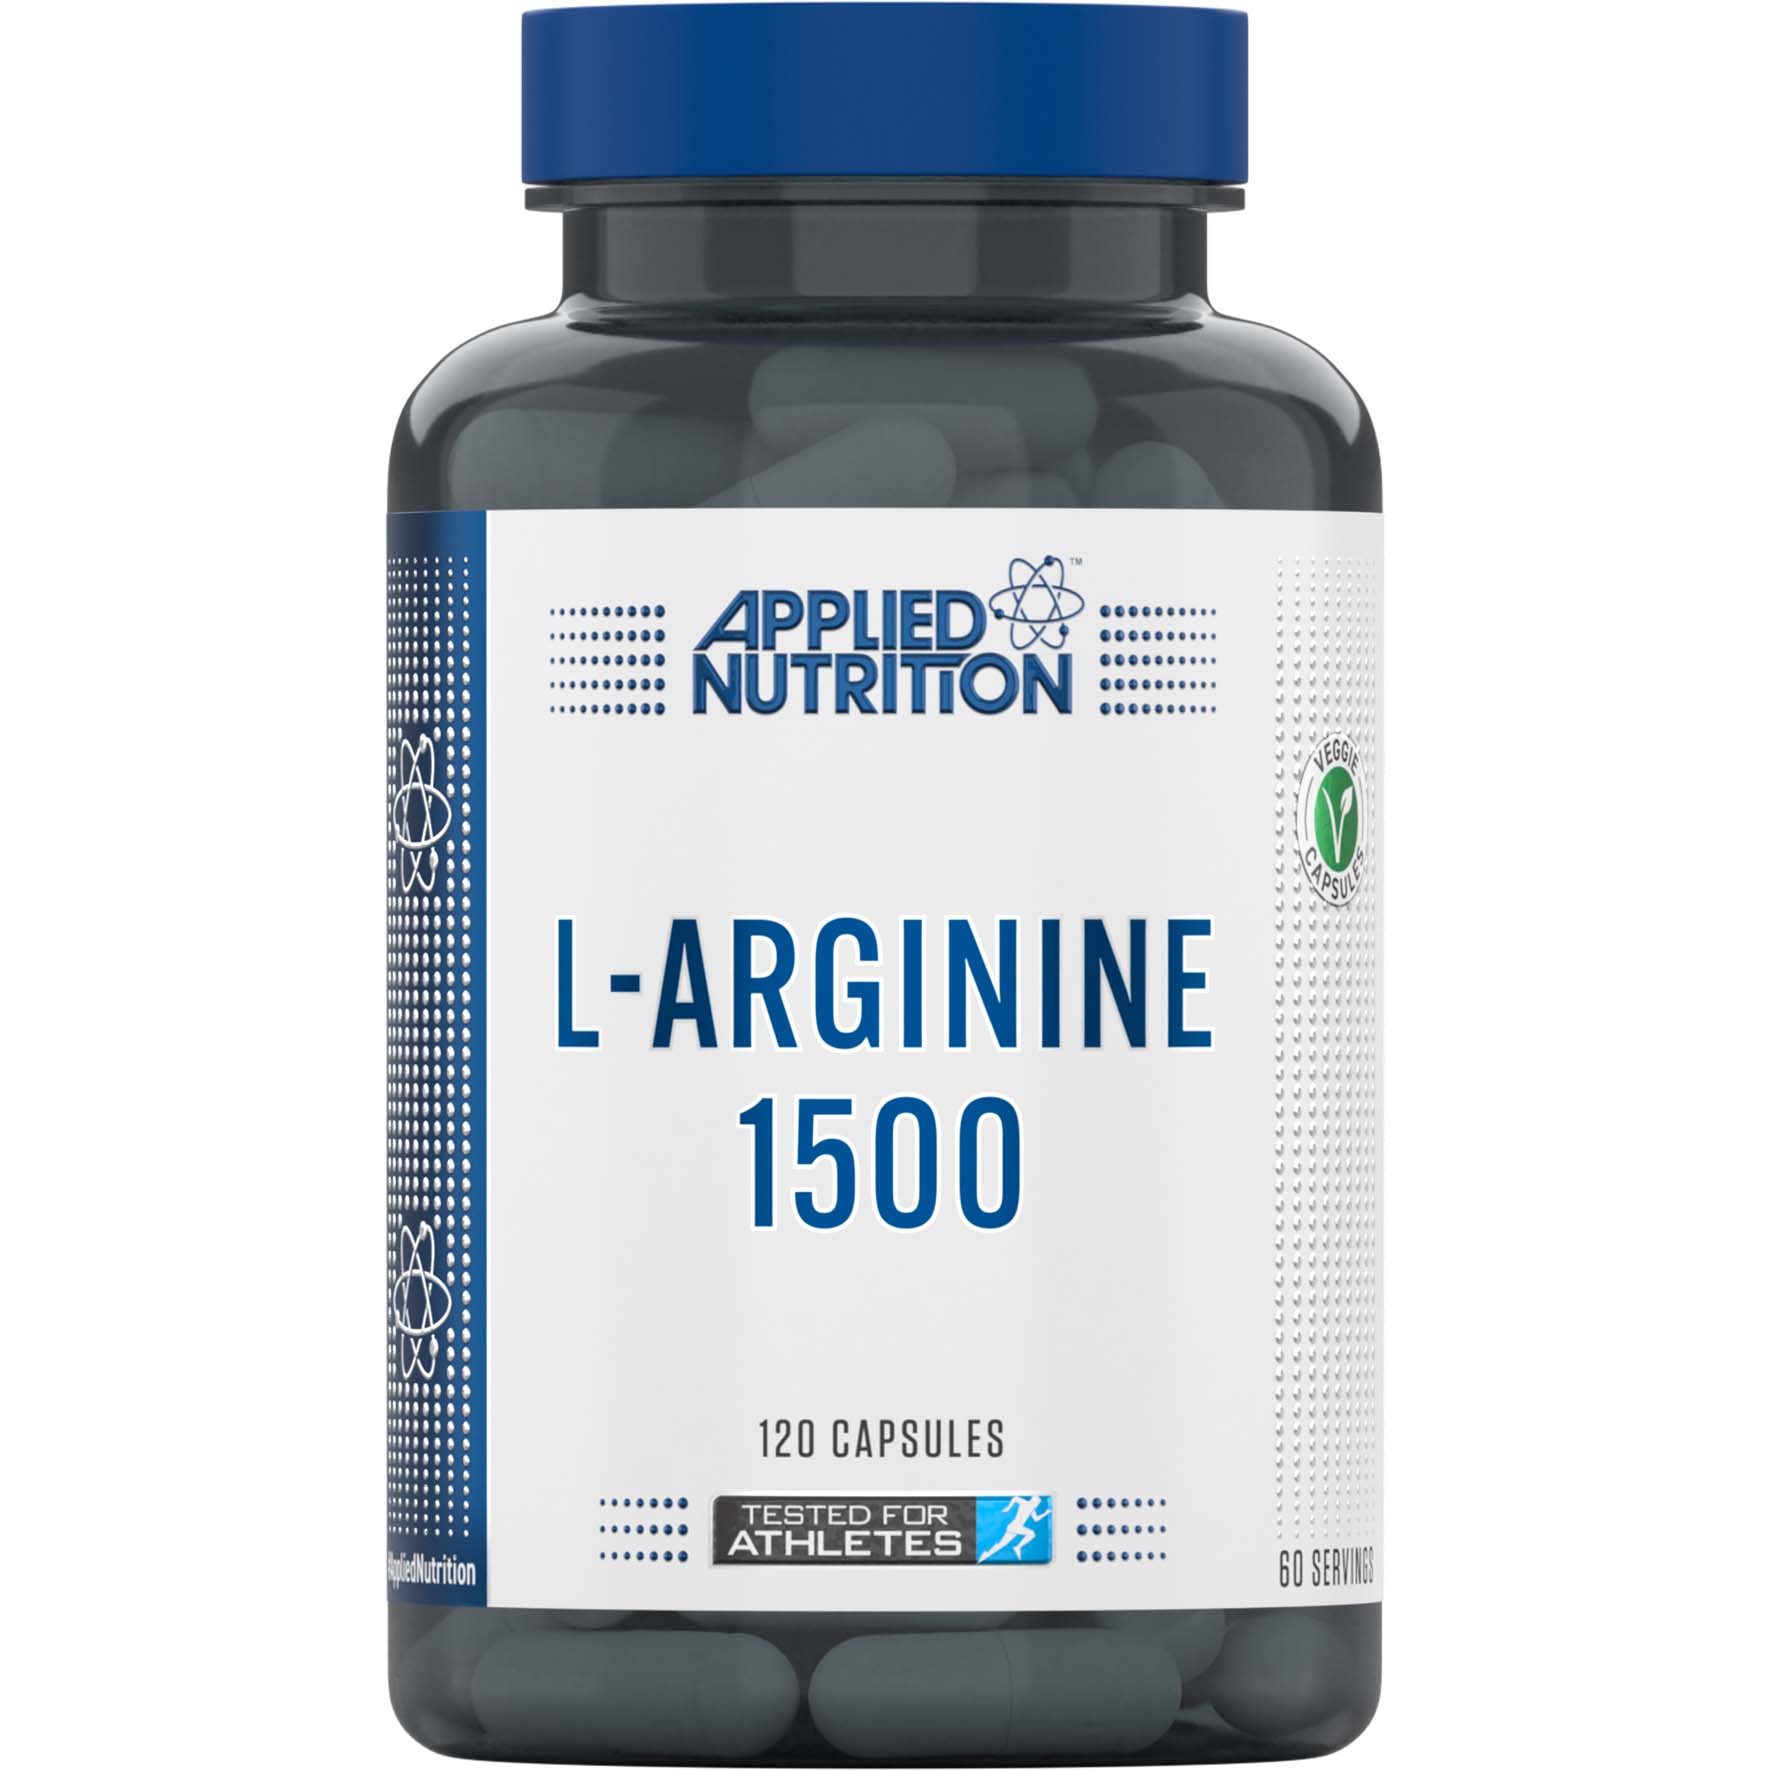 Applied Nutrition L Arginine 120 Capsules 1500 mg